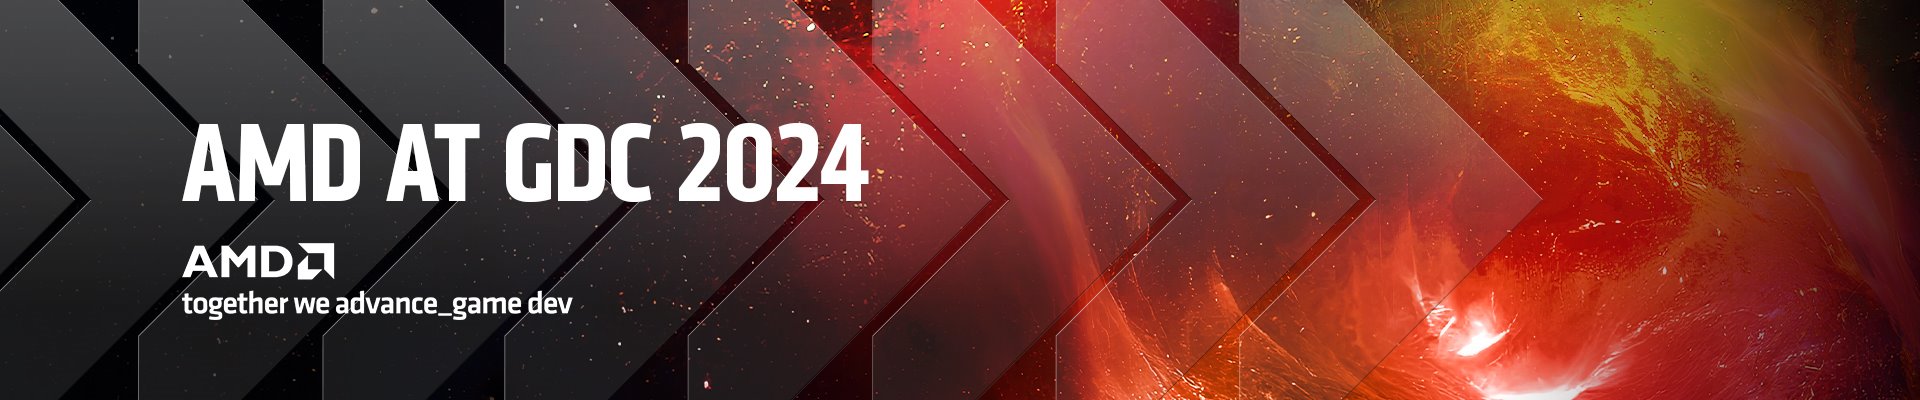 AMD at GDC 2024